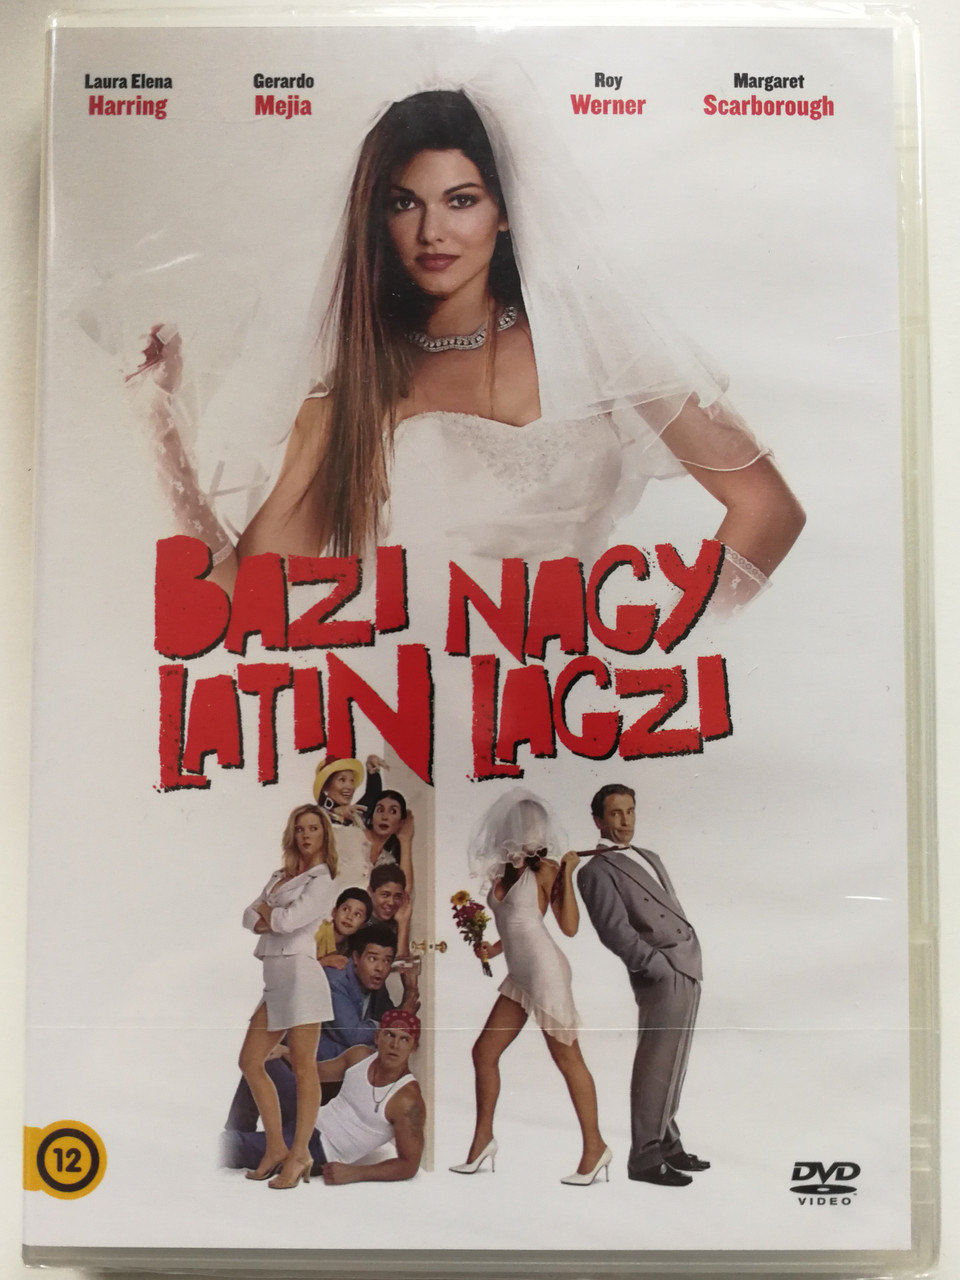 Loco Love DVD 2003 Bazi nagy latin lagzi / Directed by Bryan Lewis /  Starring: Laura Harring, Roy Werner, Gerardo Mejía - bibleinmylanguage